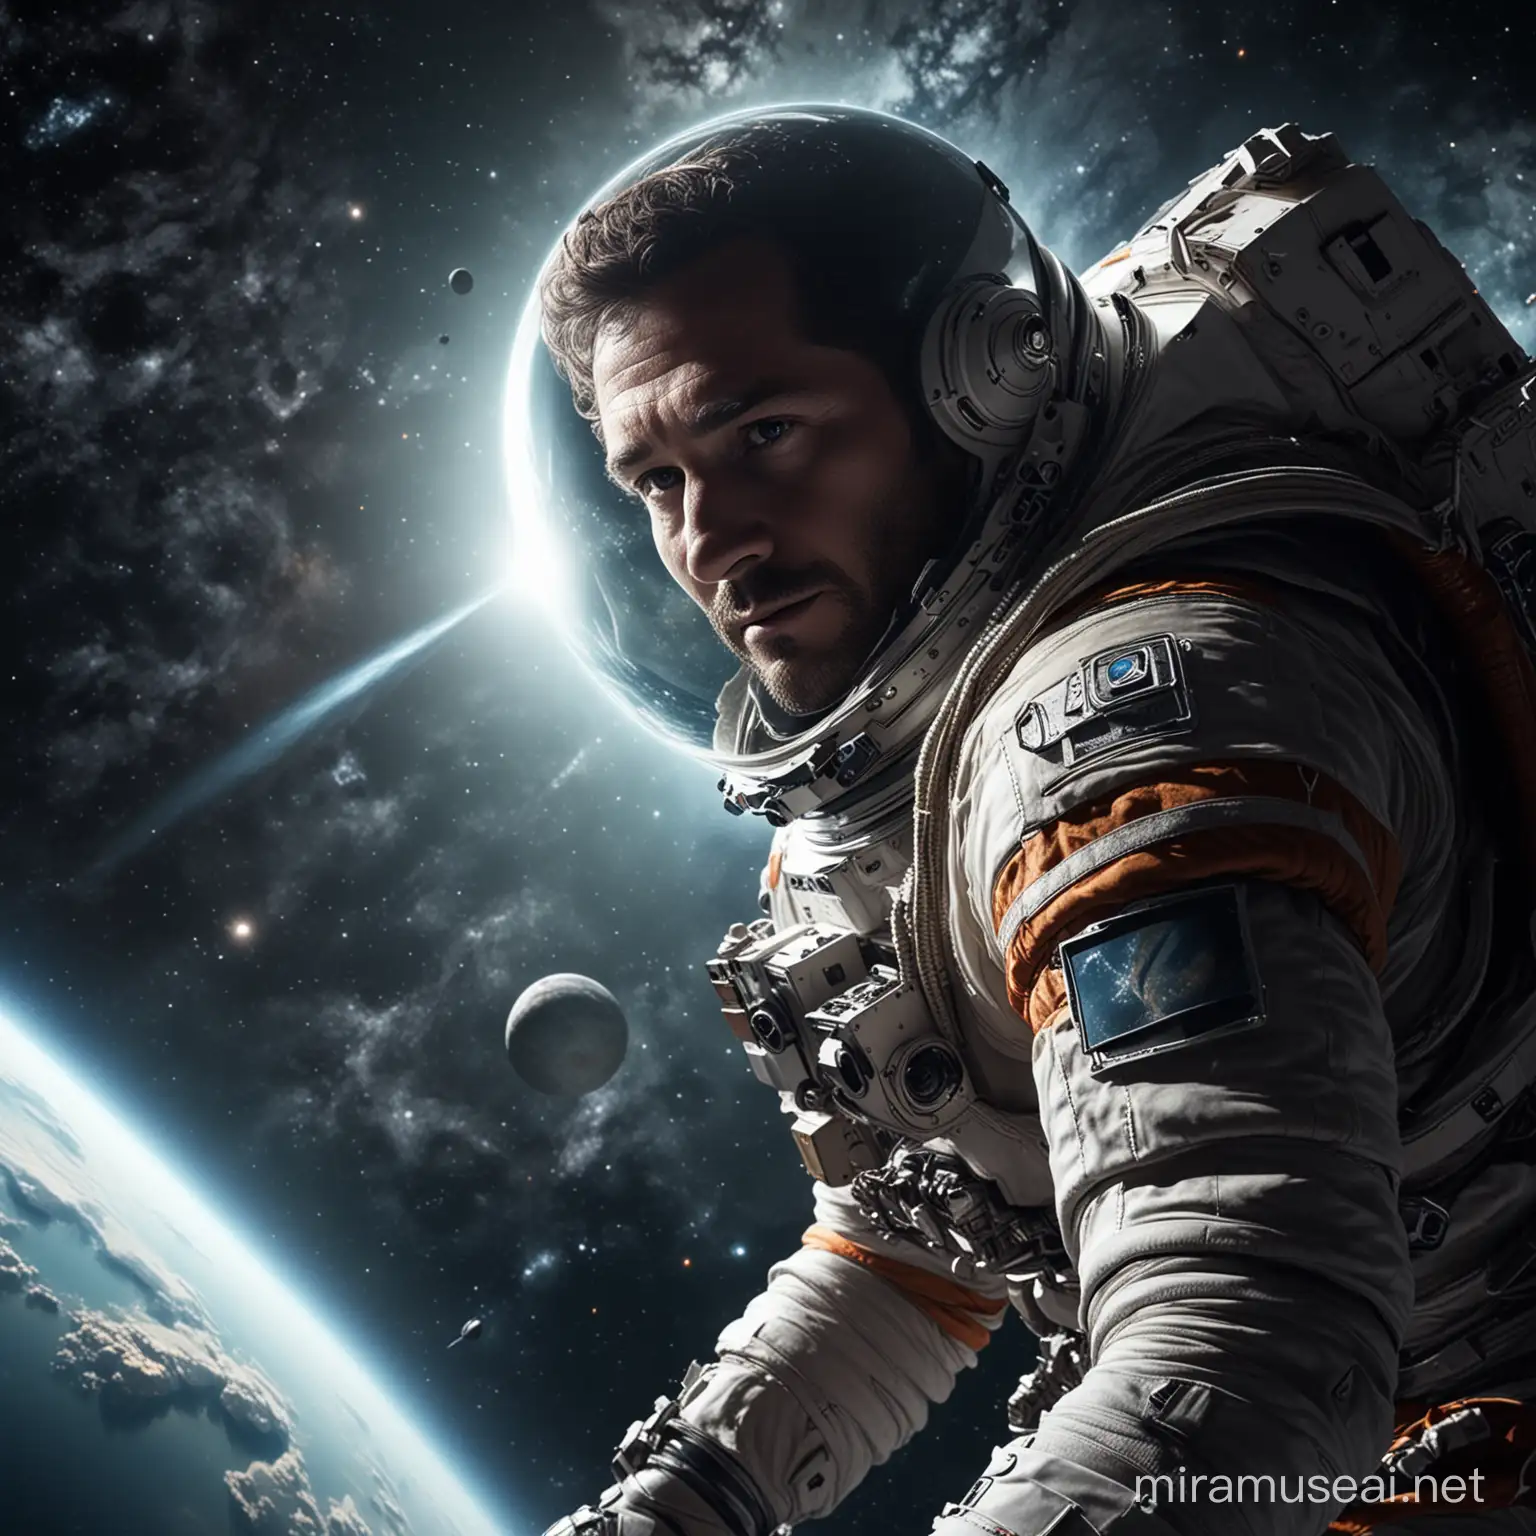 Astronaut Floating in Space Realistic Digital Art 8K 169